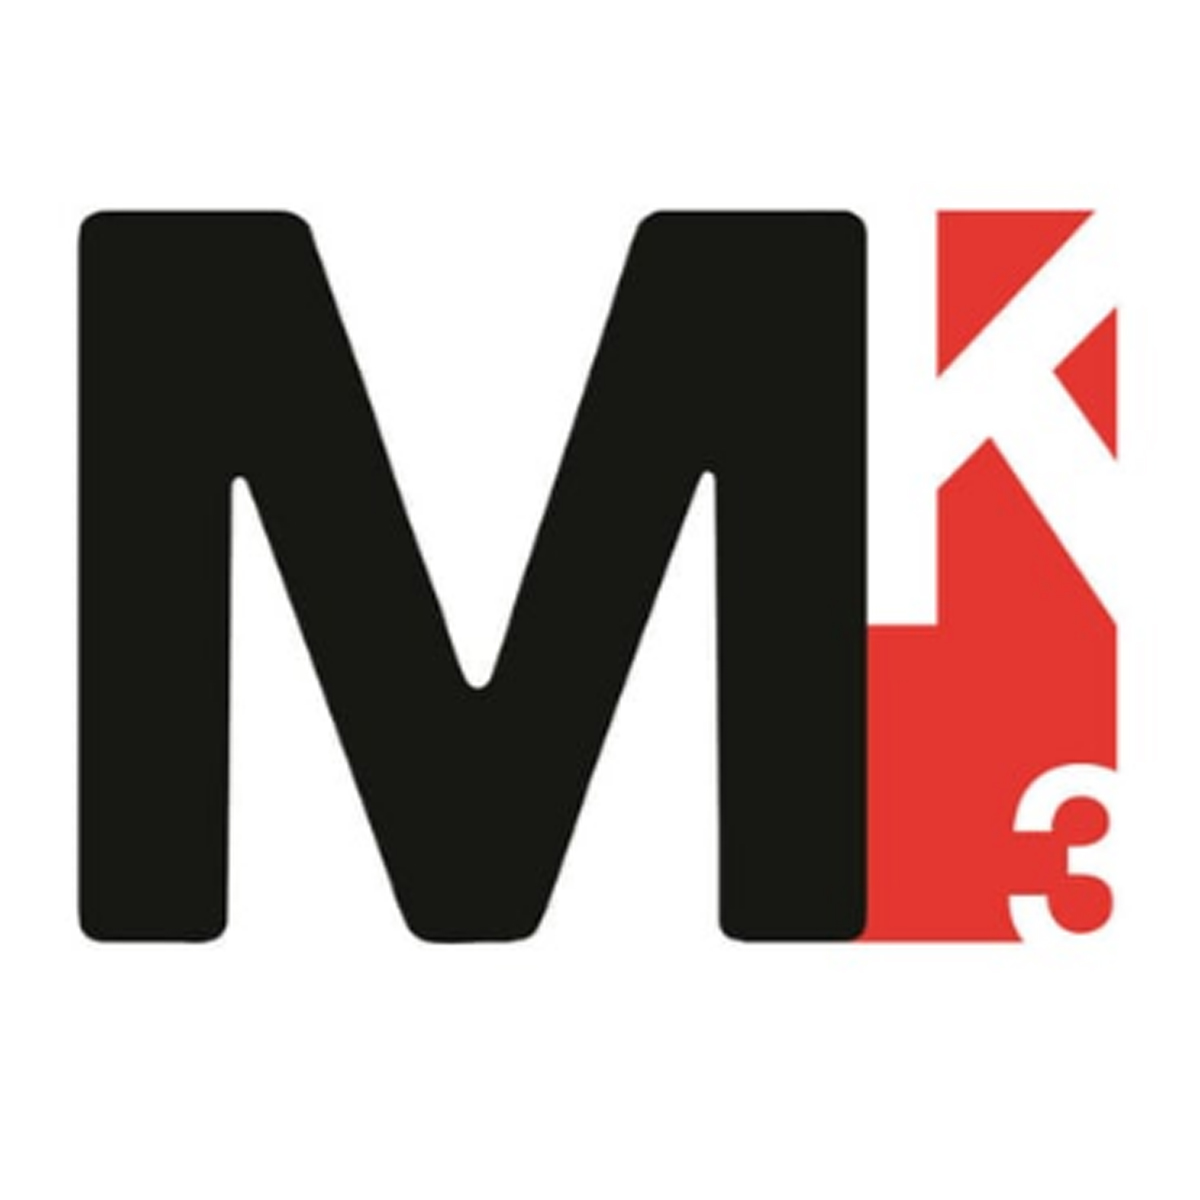 MK3Sq.jpg